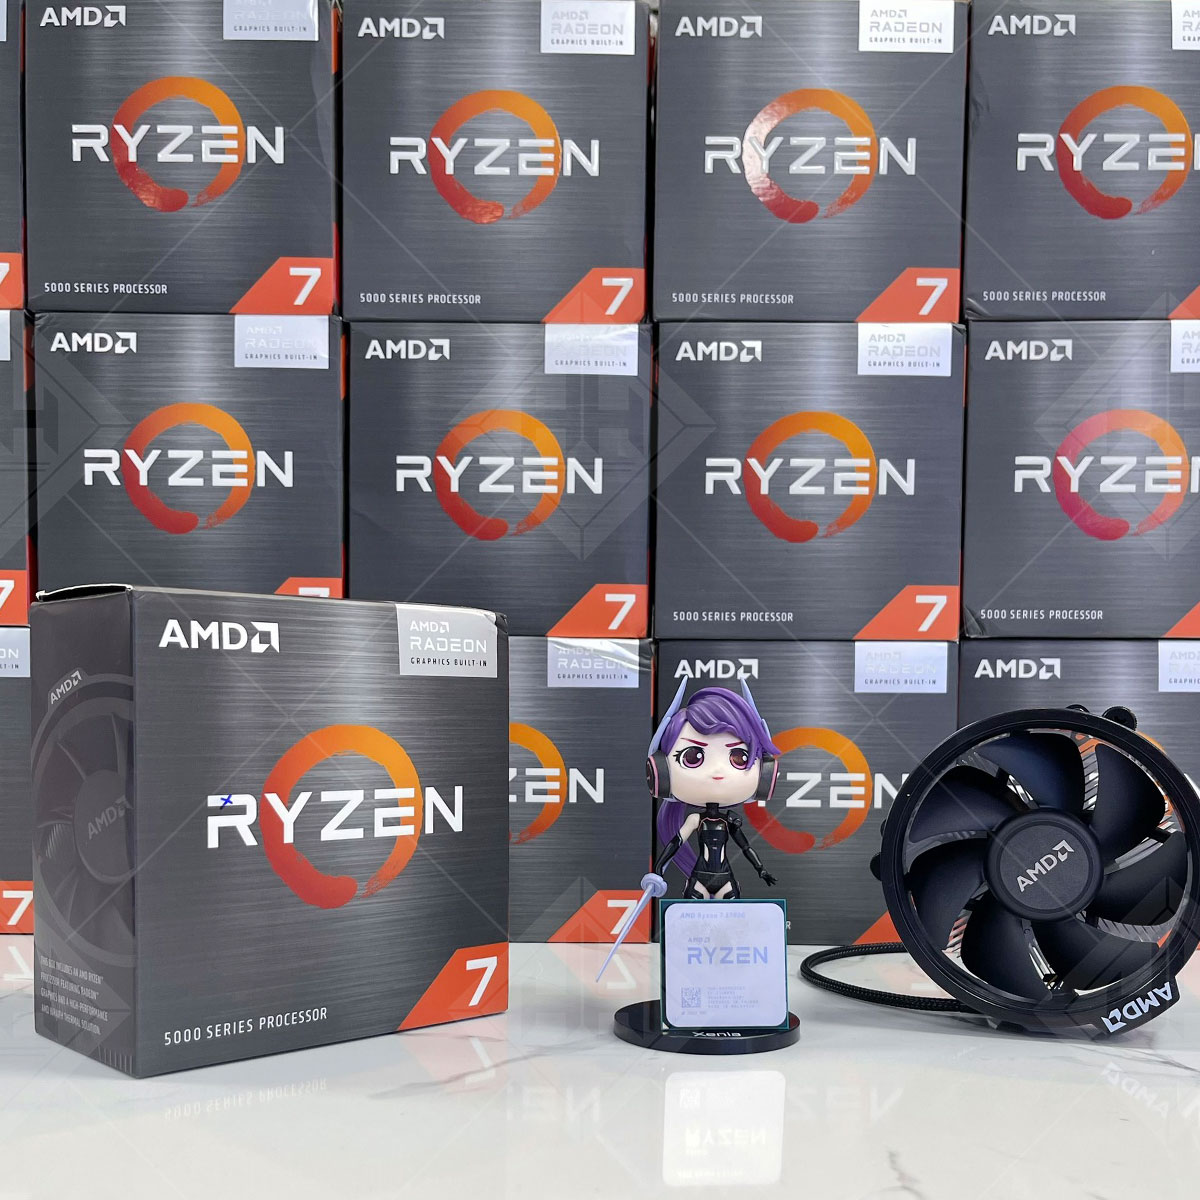 CPU AMD Ryzen 7 5700G (3.5GHz Turbo Up To 4.6 GHz, 8 Nhân 16 Luồng, 20MB Cache, AM4)